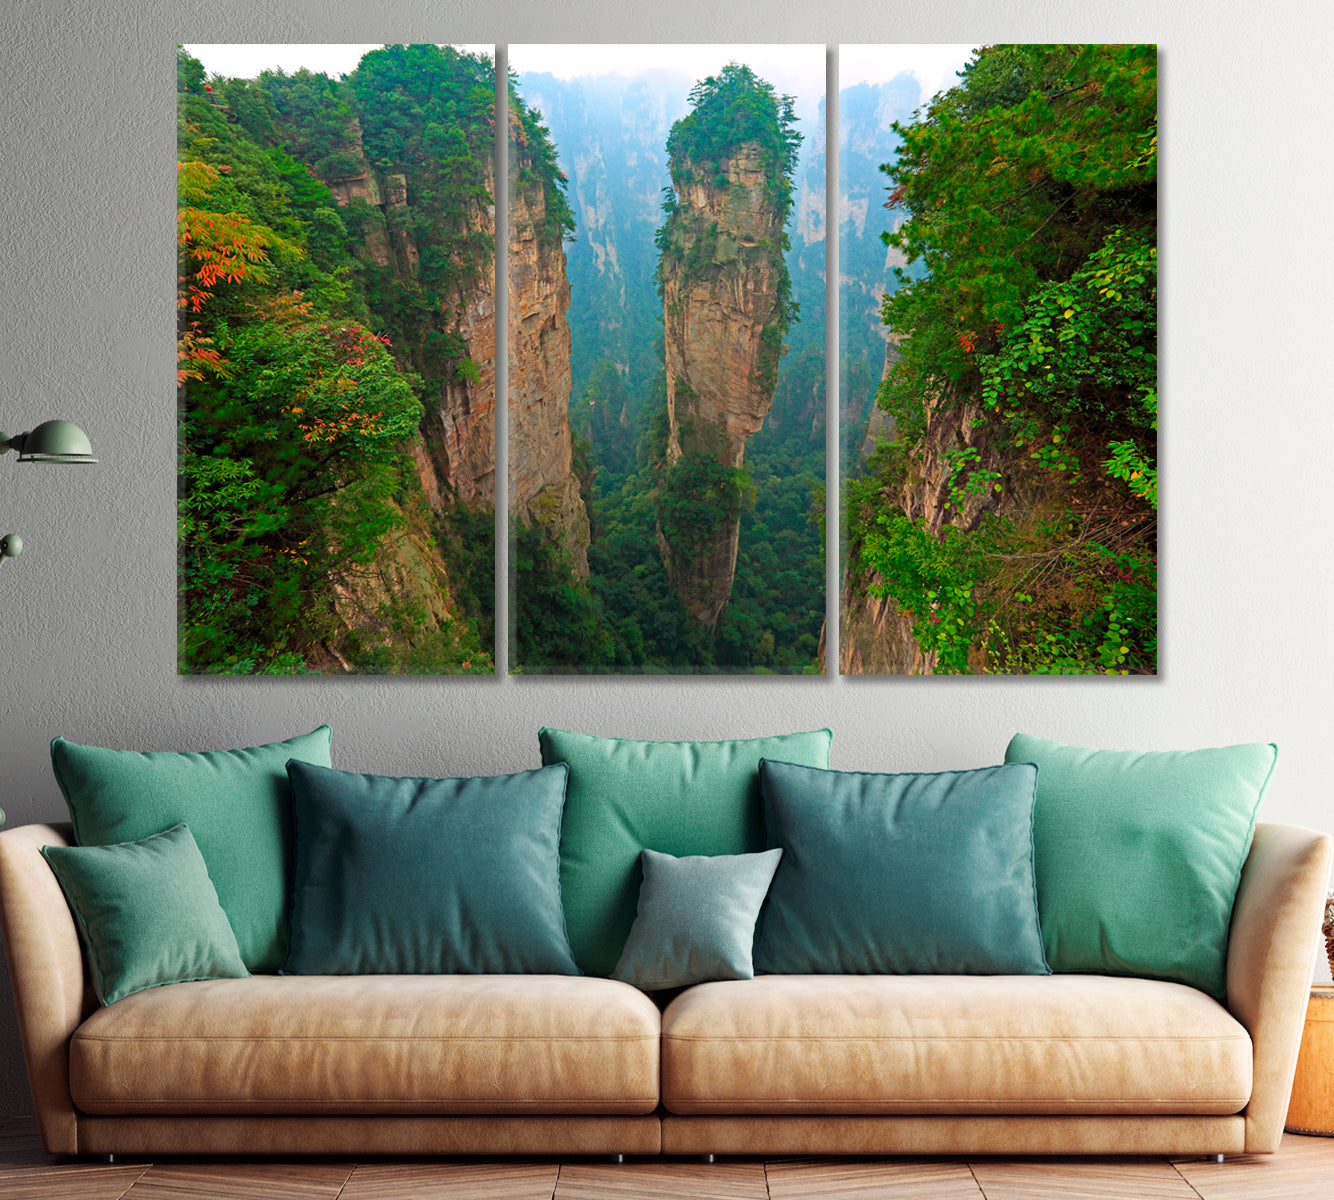 HANGING ROCKS Zhangjiajie National Mountain Forest Park China Countries Canvas Print Artesty 3 panels 36" x 24" 